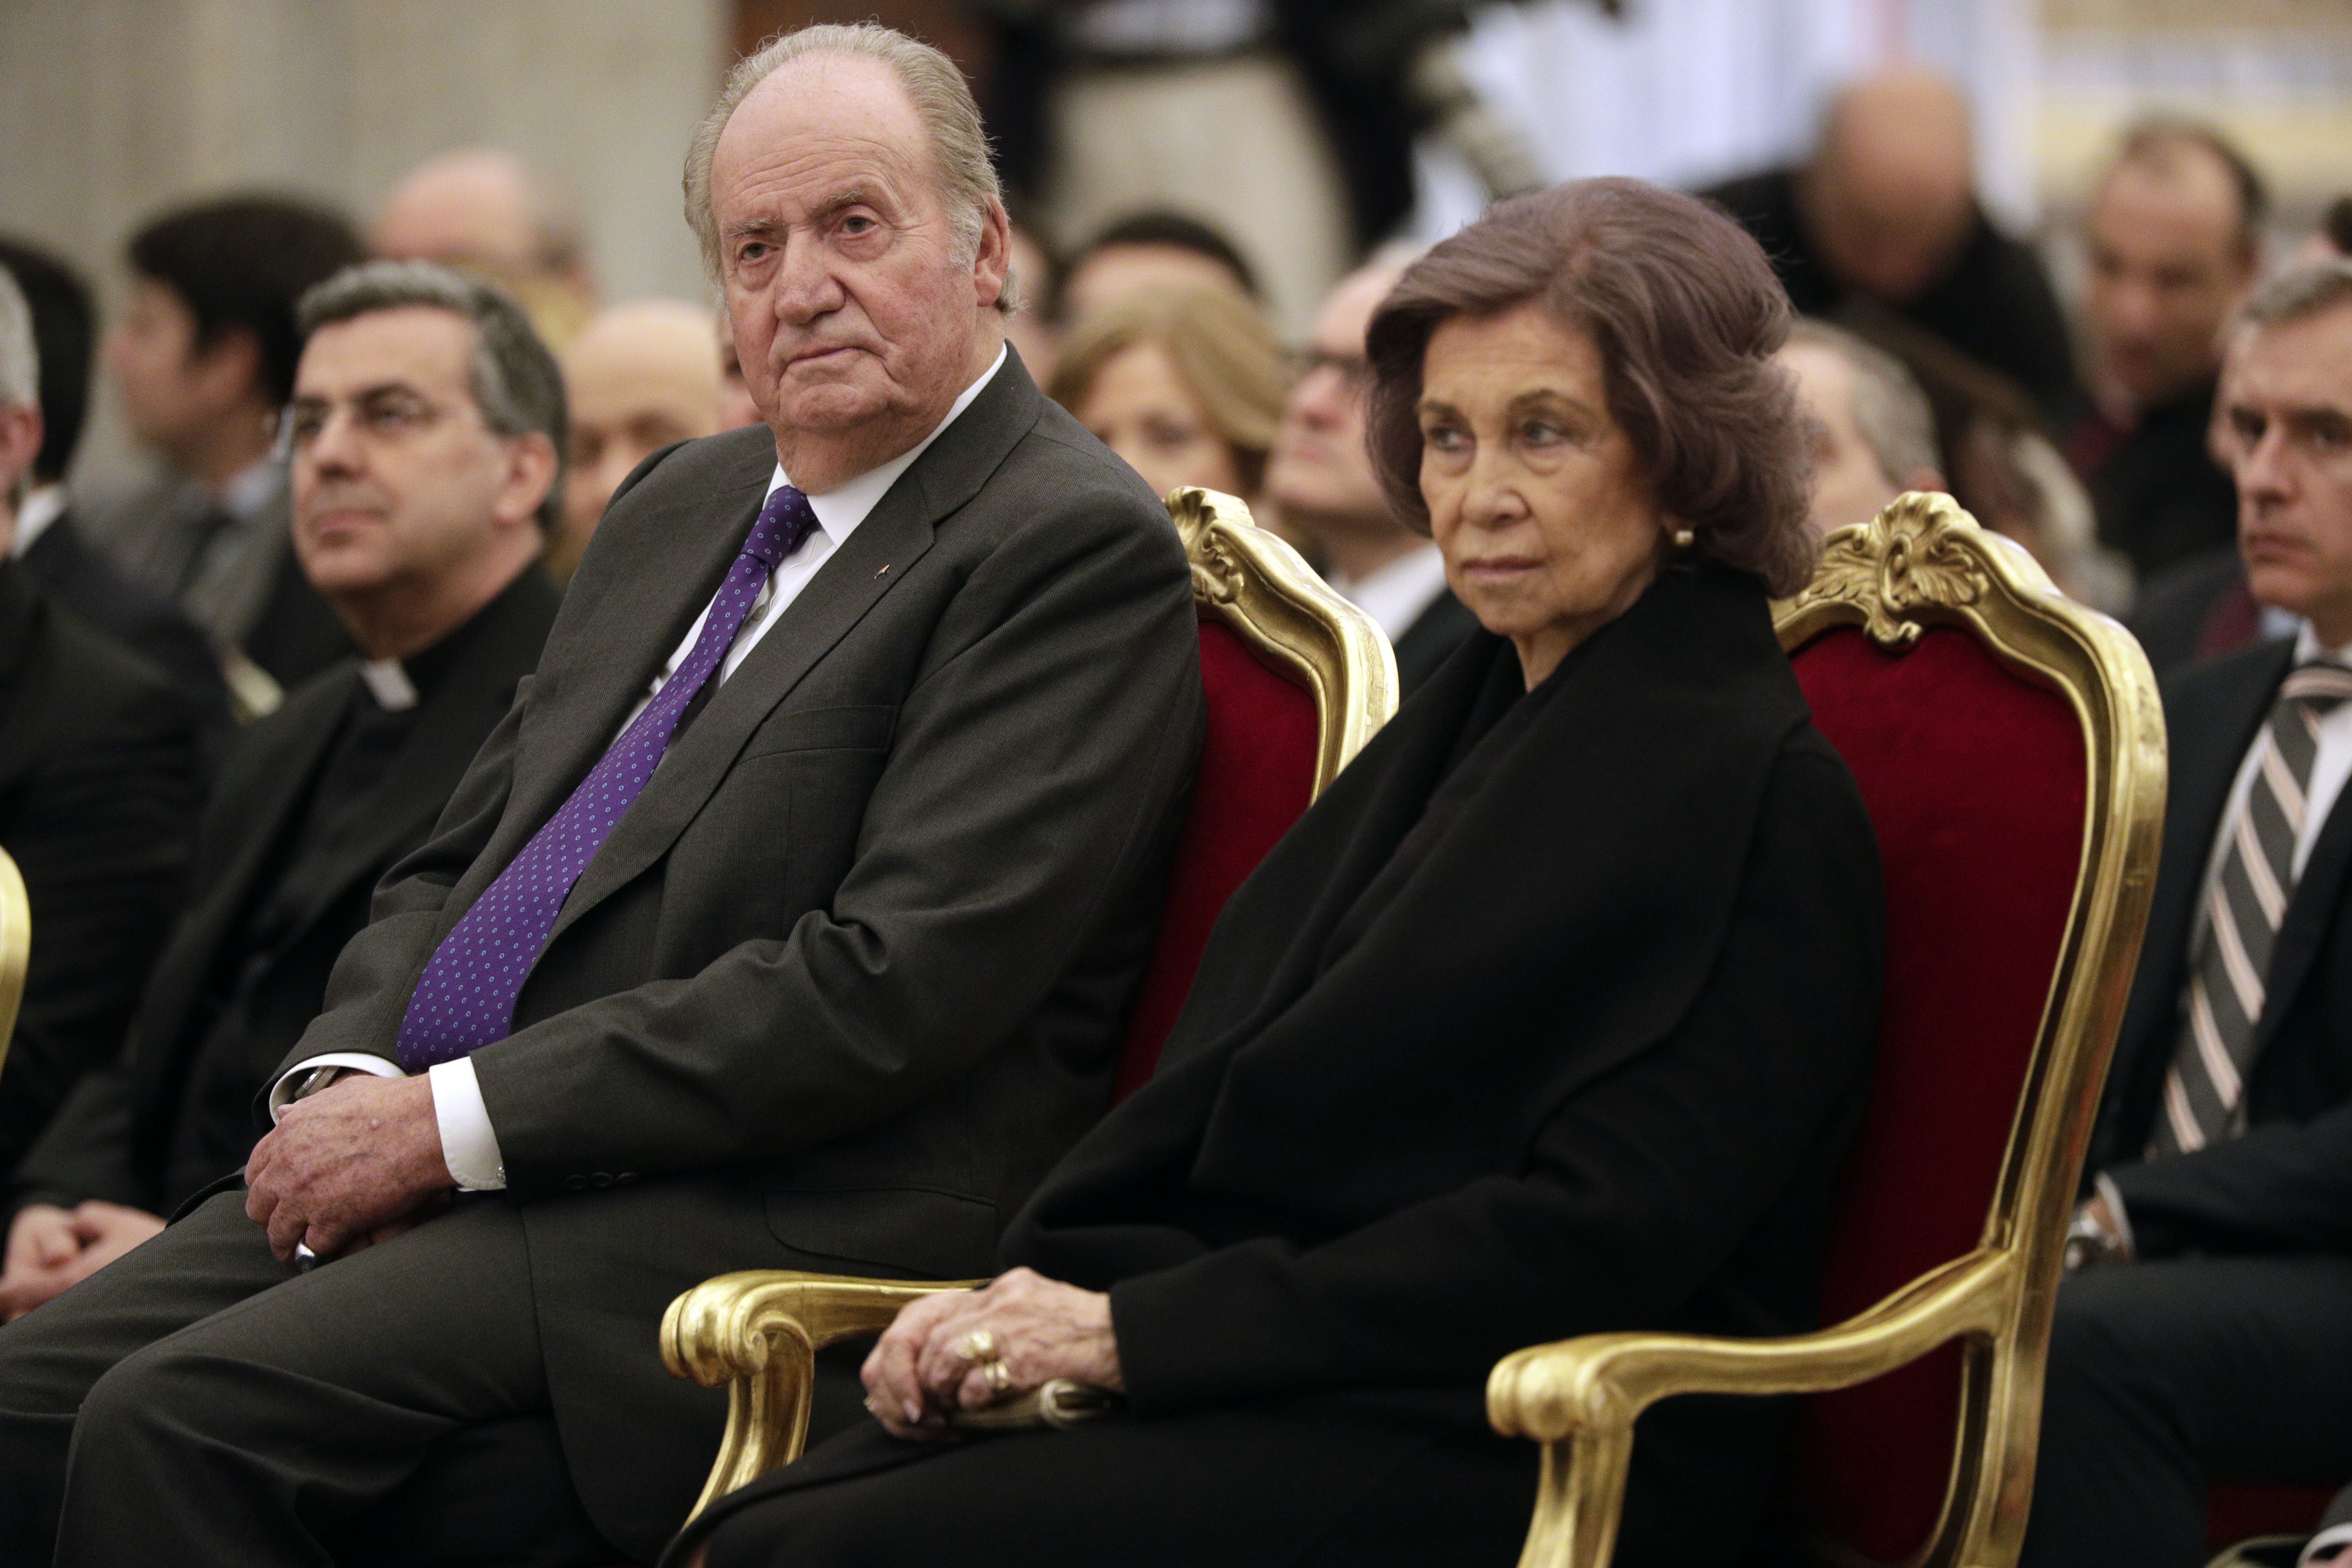 La ira de Joan Carles per acompanyar Sofía i no Bolsonaro: "¡A tomar por c...!"